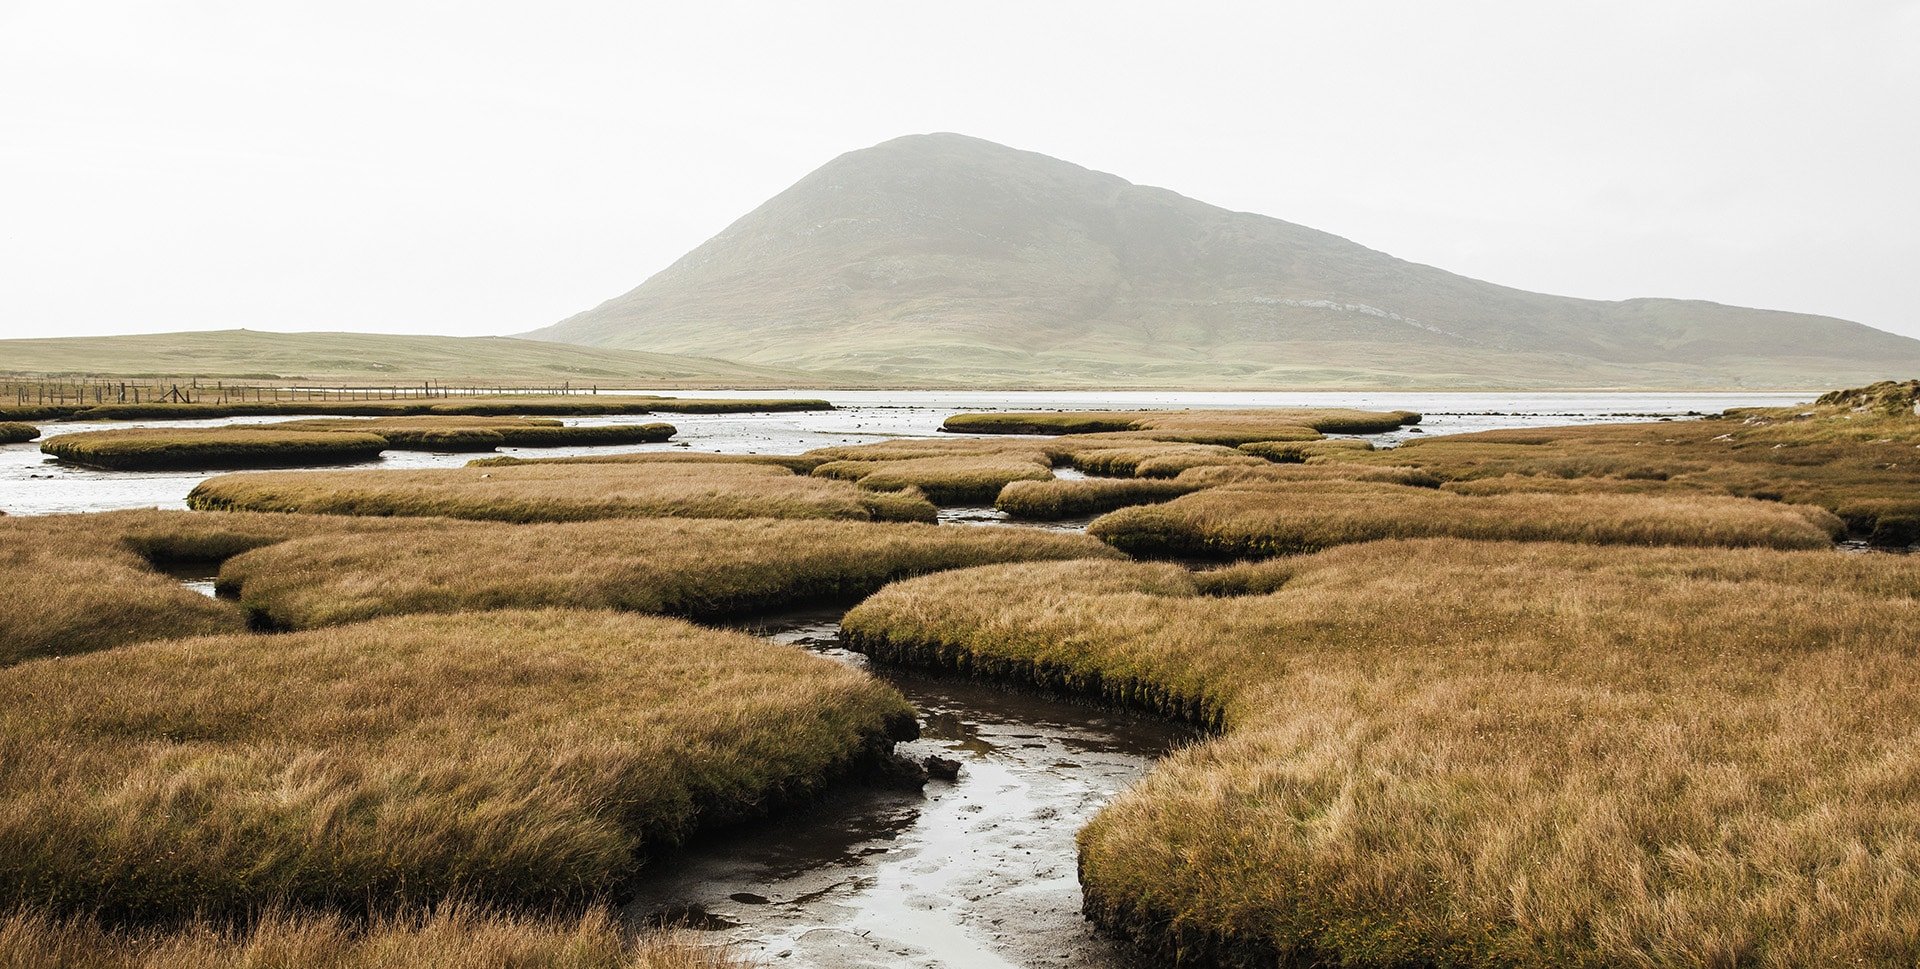 Scotland: The land of photographers